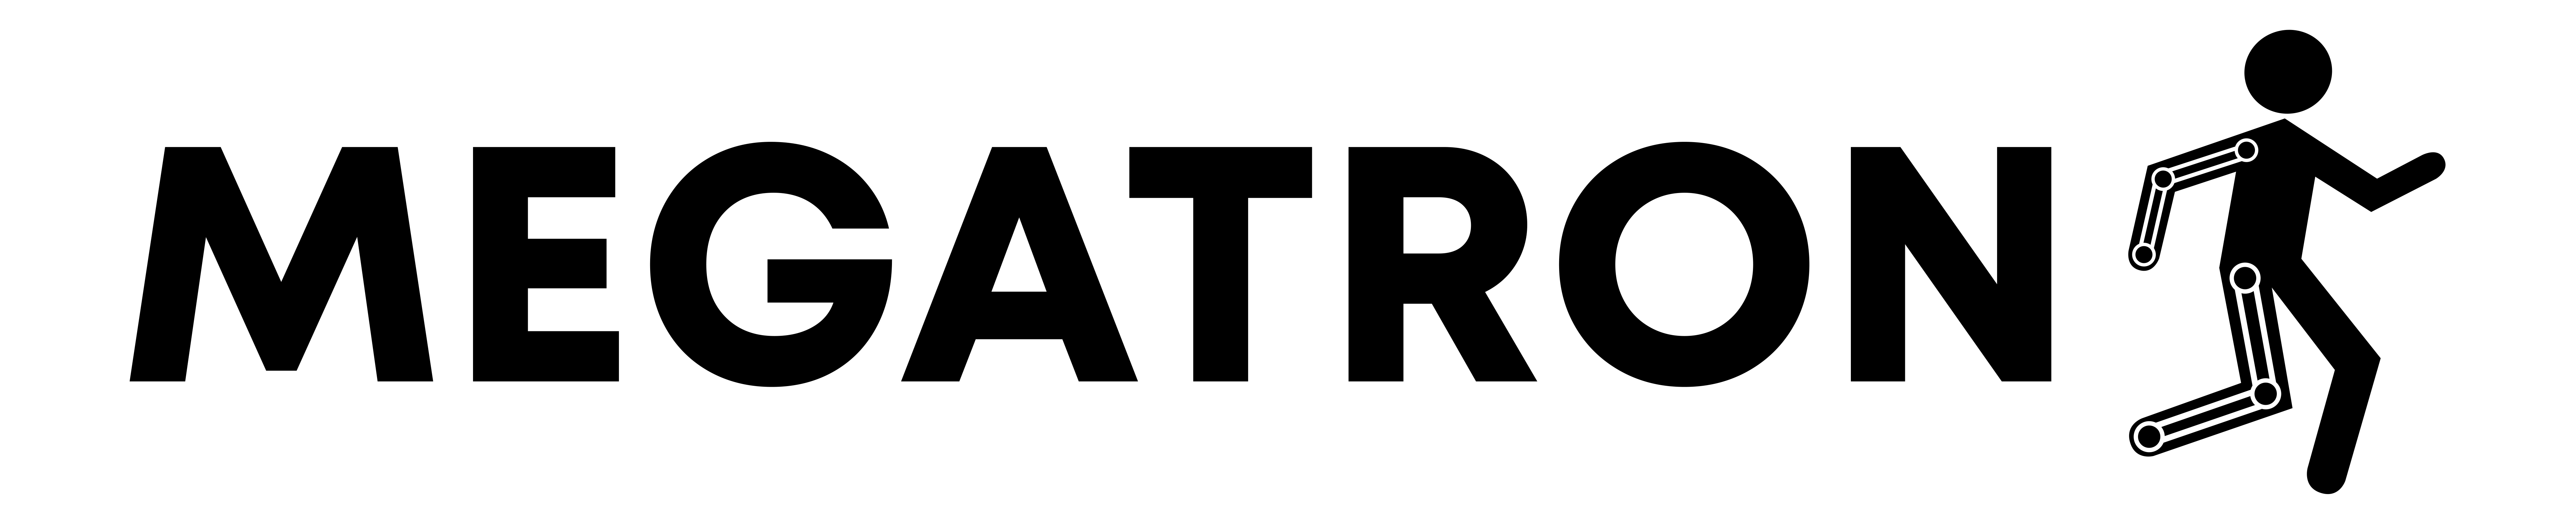 megatron logo